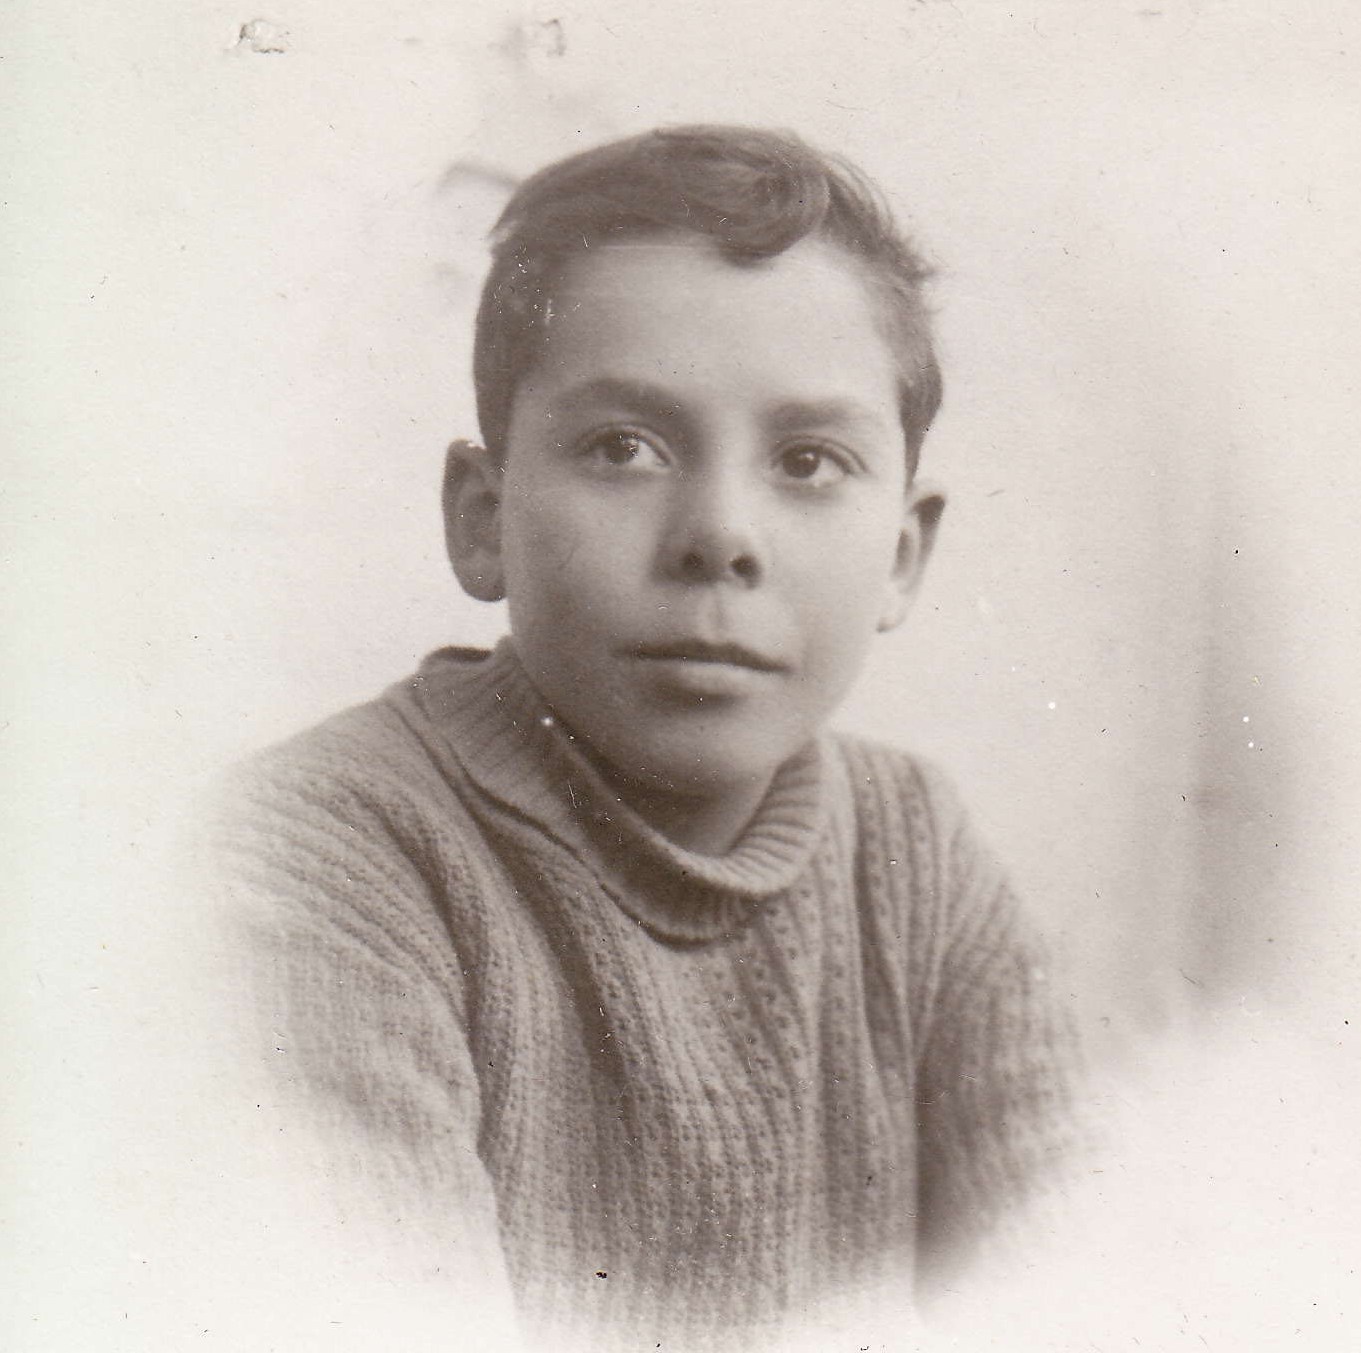 Mosca Di Veroli | Remember Me: Displaced Children of the Holocaust